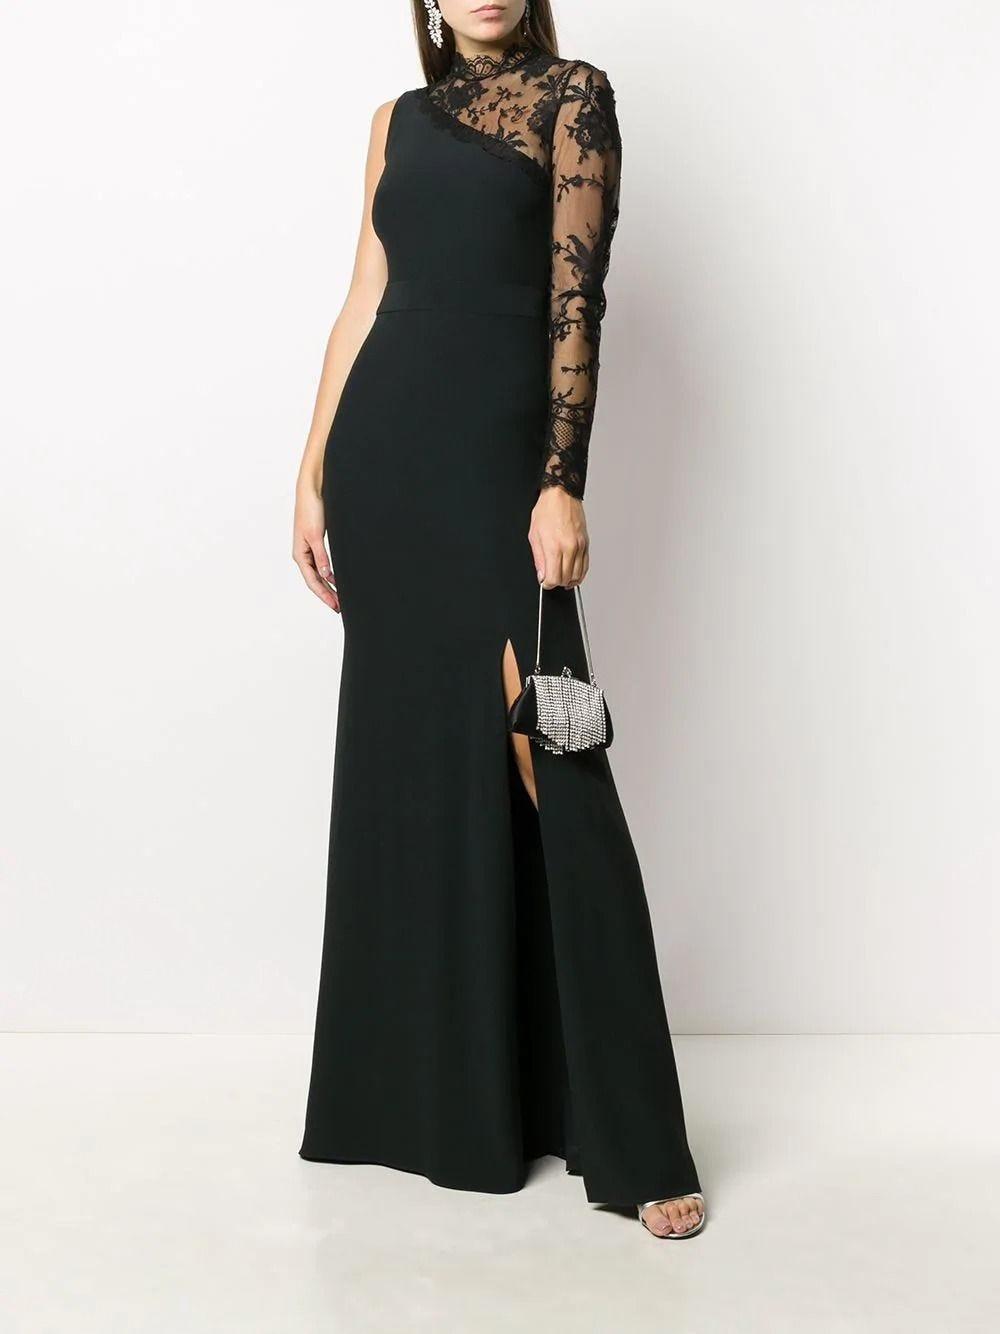 Alexander McQueen Lace Evening Dress in Black - Lyst